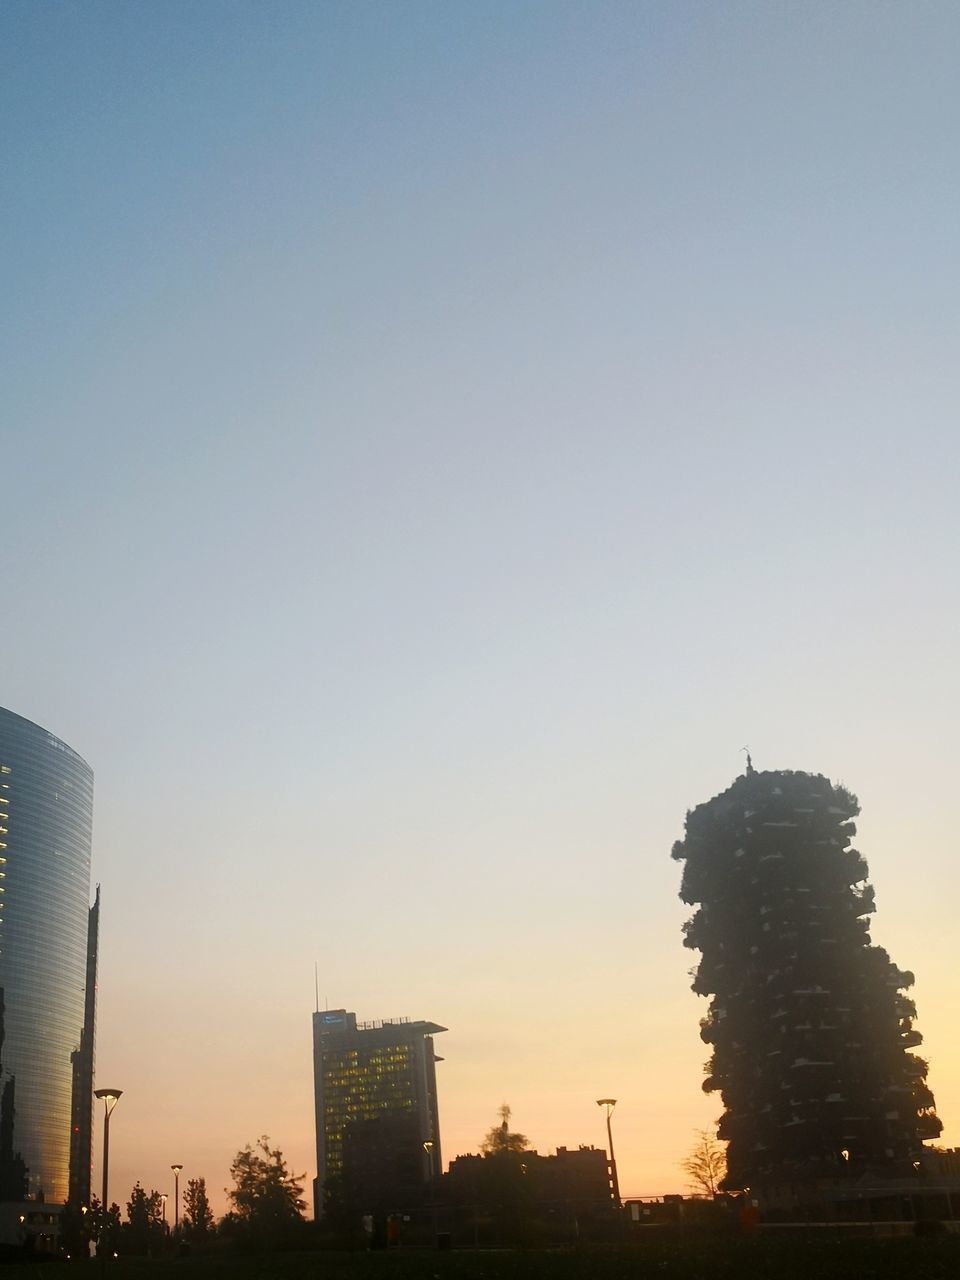 MODERN BUILDINGS IN CITY AGAINST CLEAR SKY